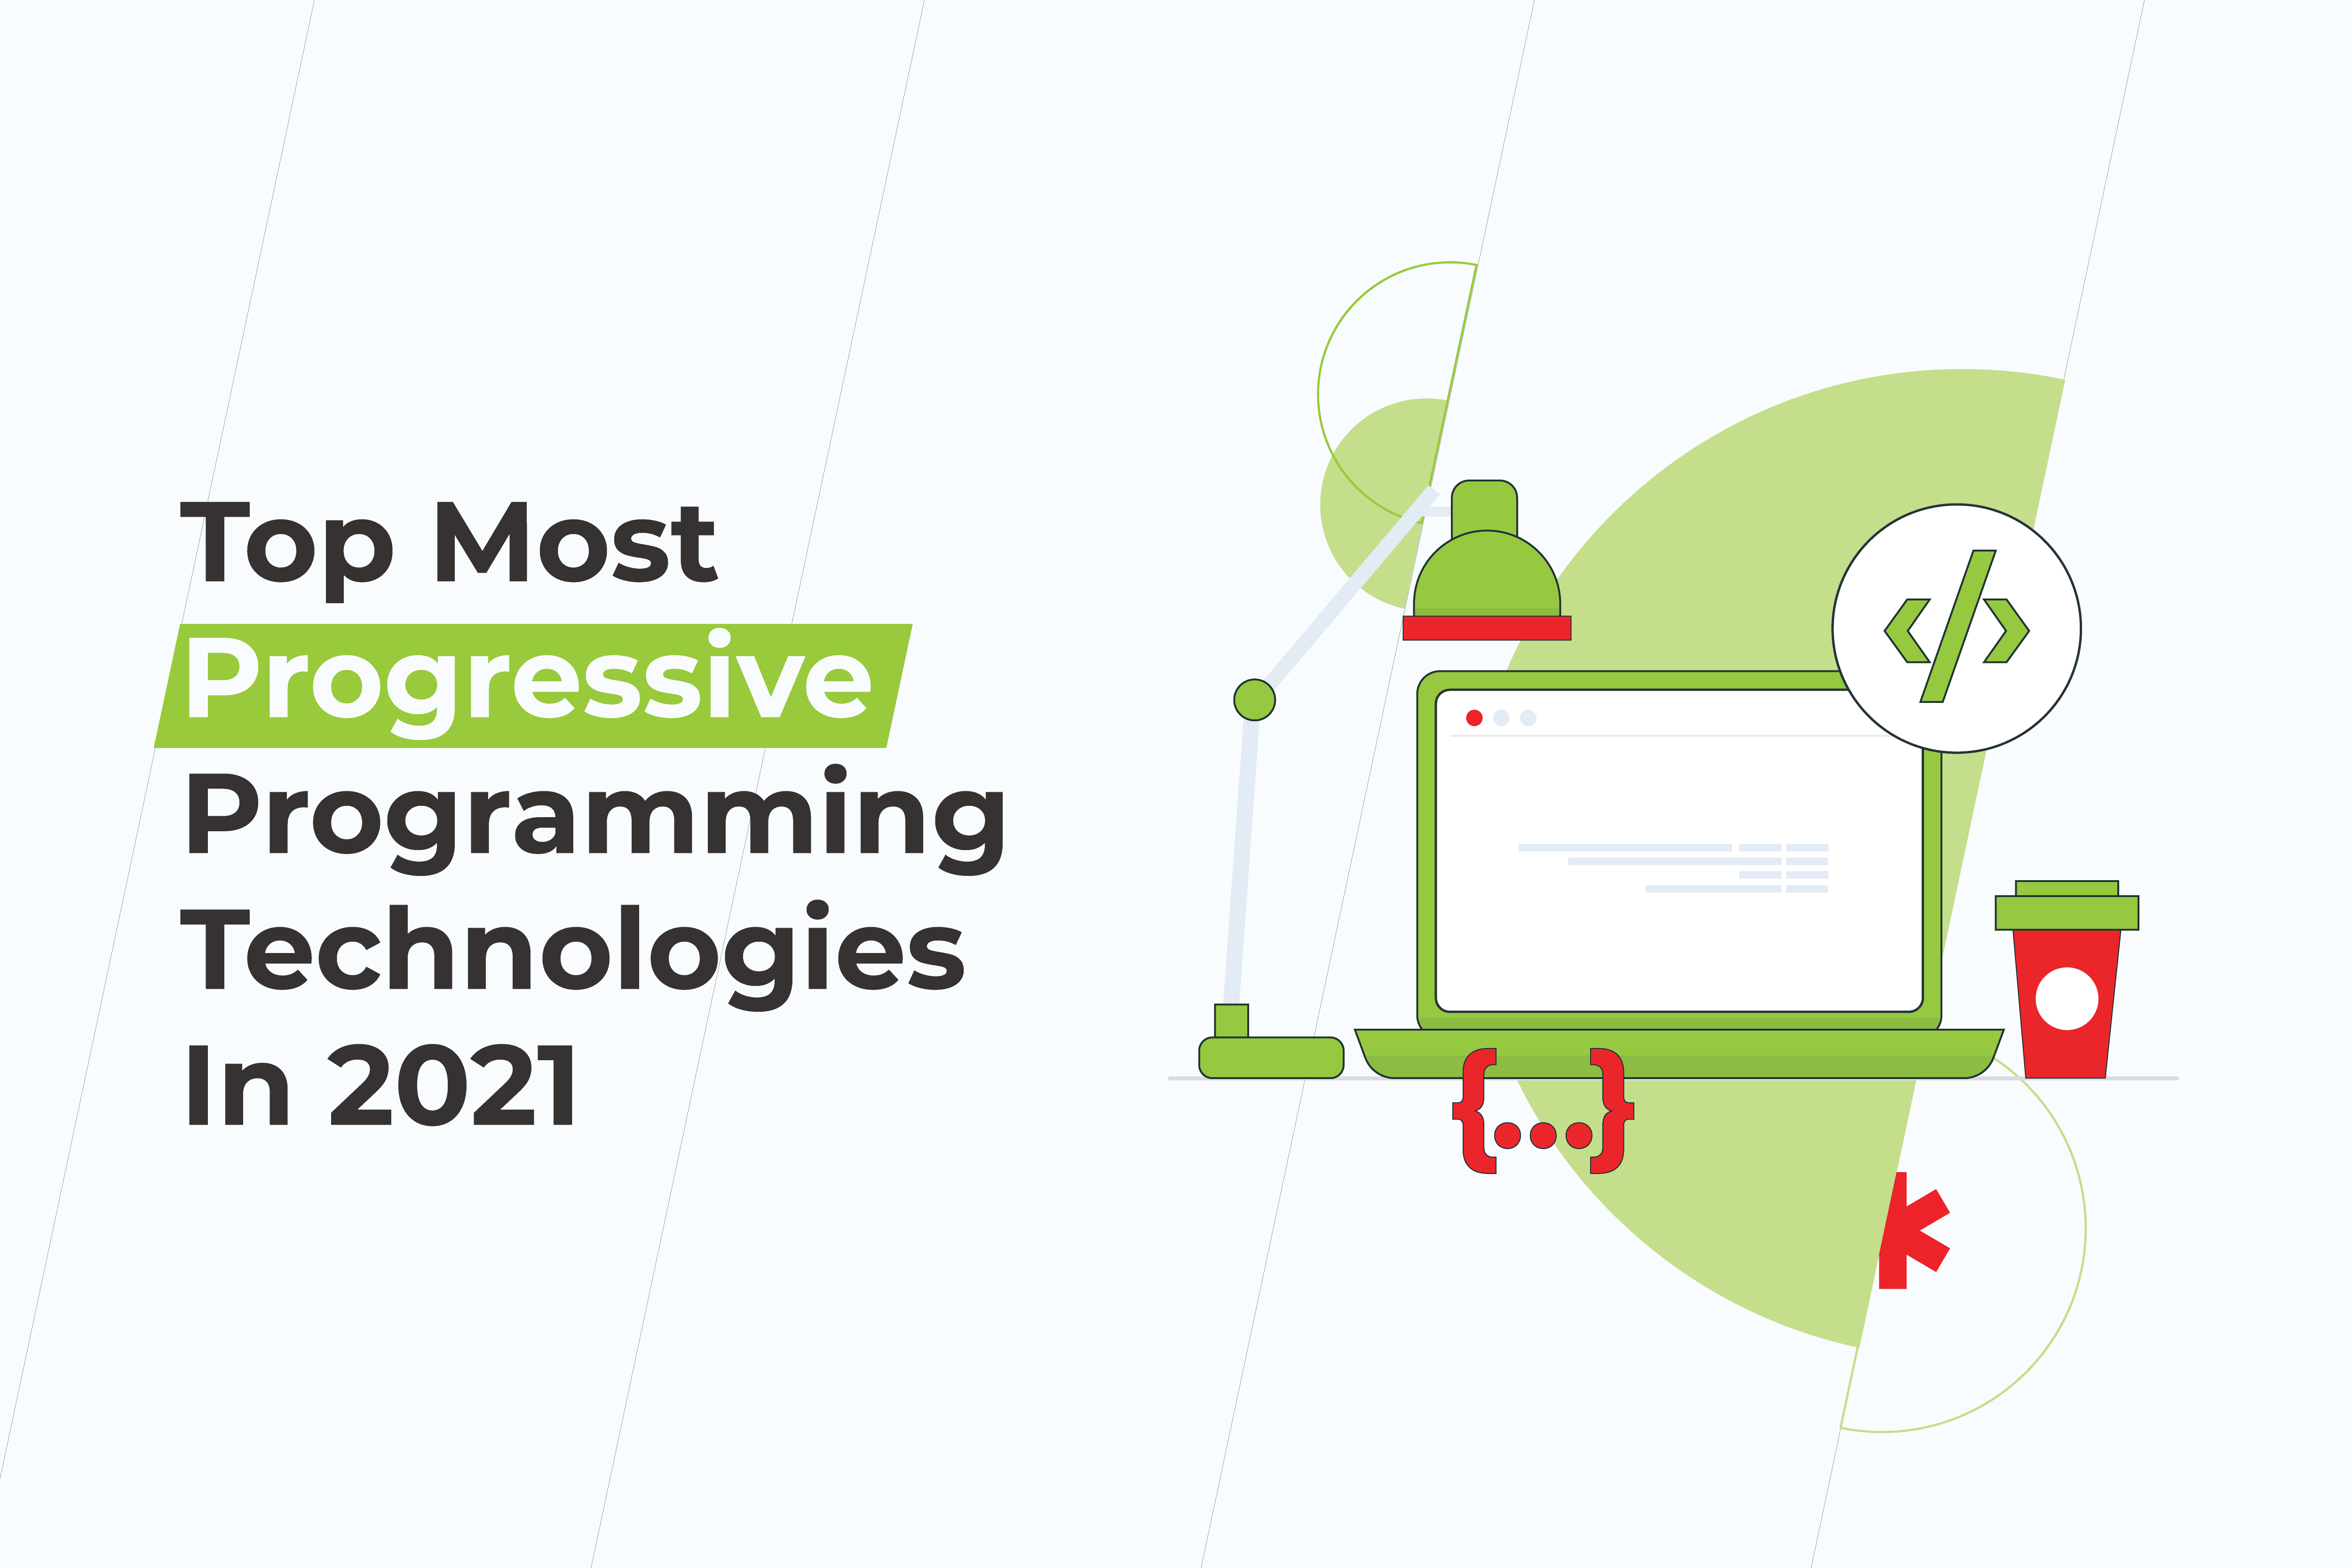 Top Most Progressive Programming Technologies In 2021